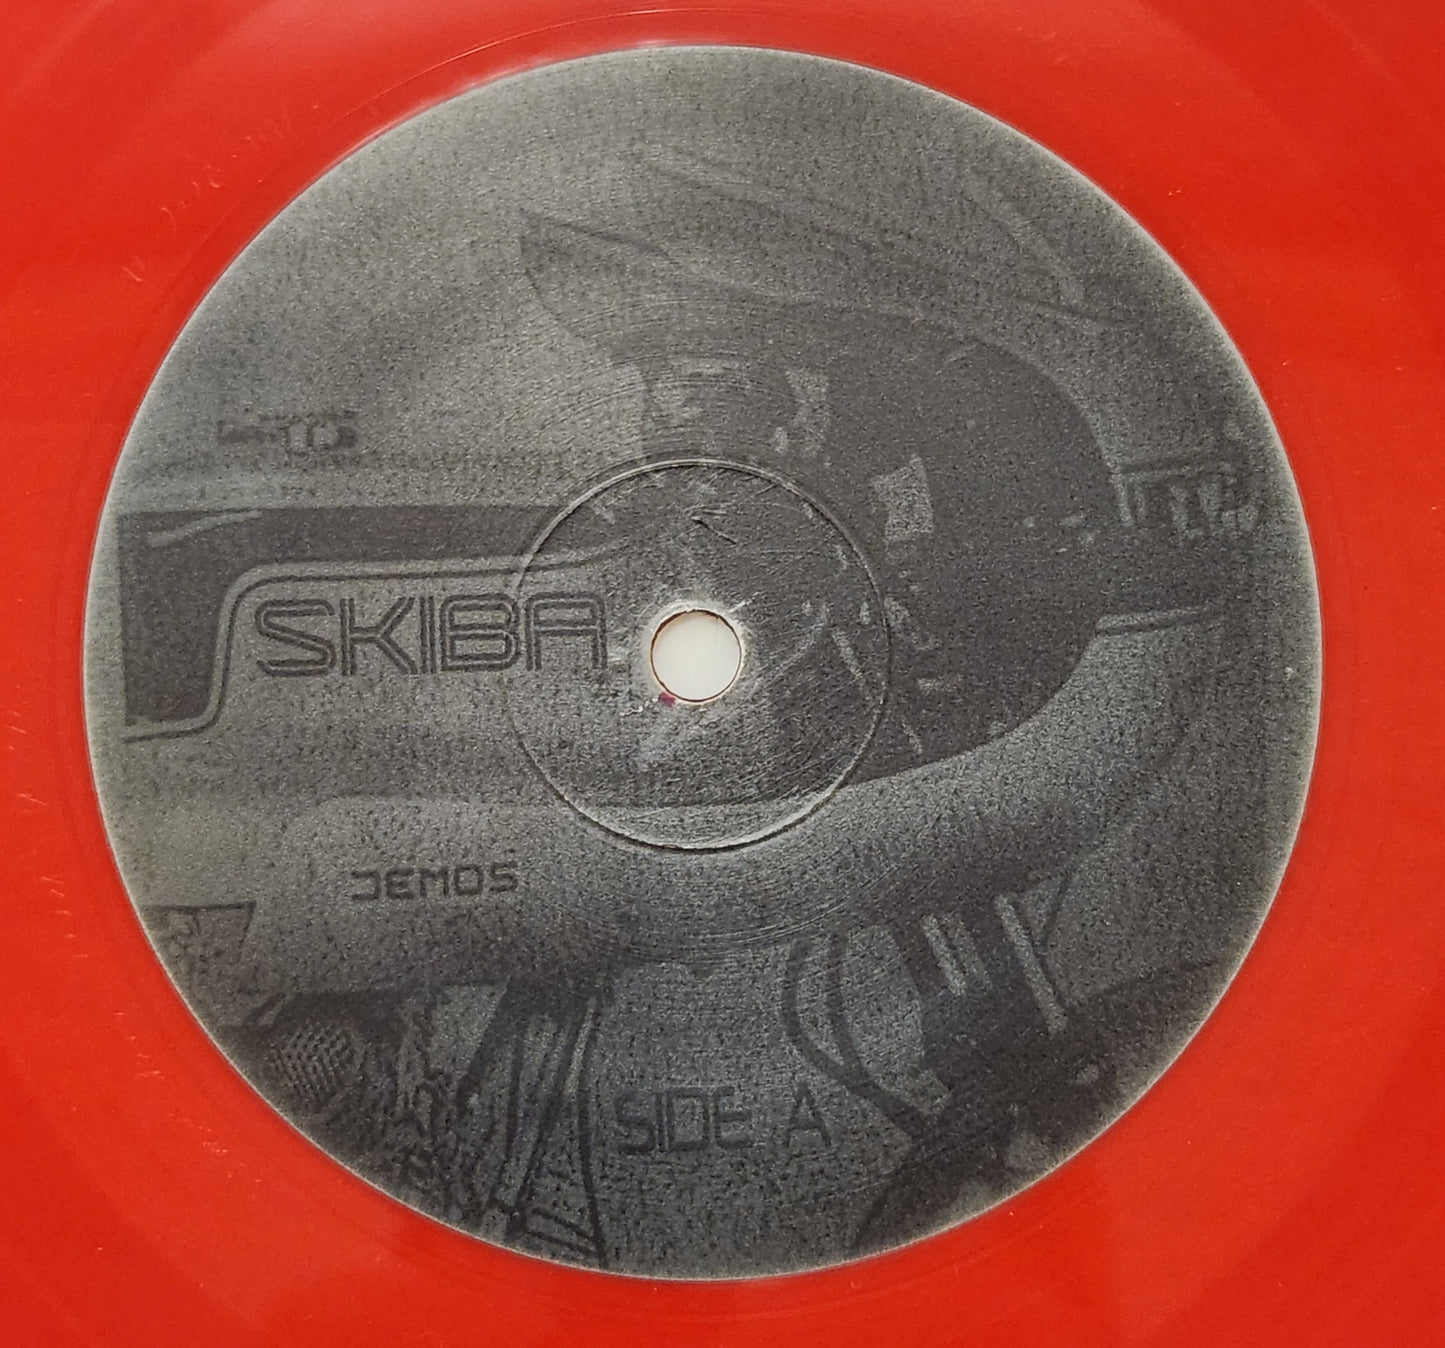 Matt Skiba "Demos" 2010 Acoustic Rock Record Album (Red Vinyl)